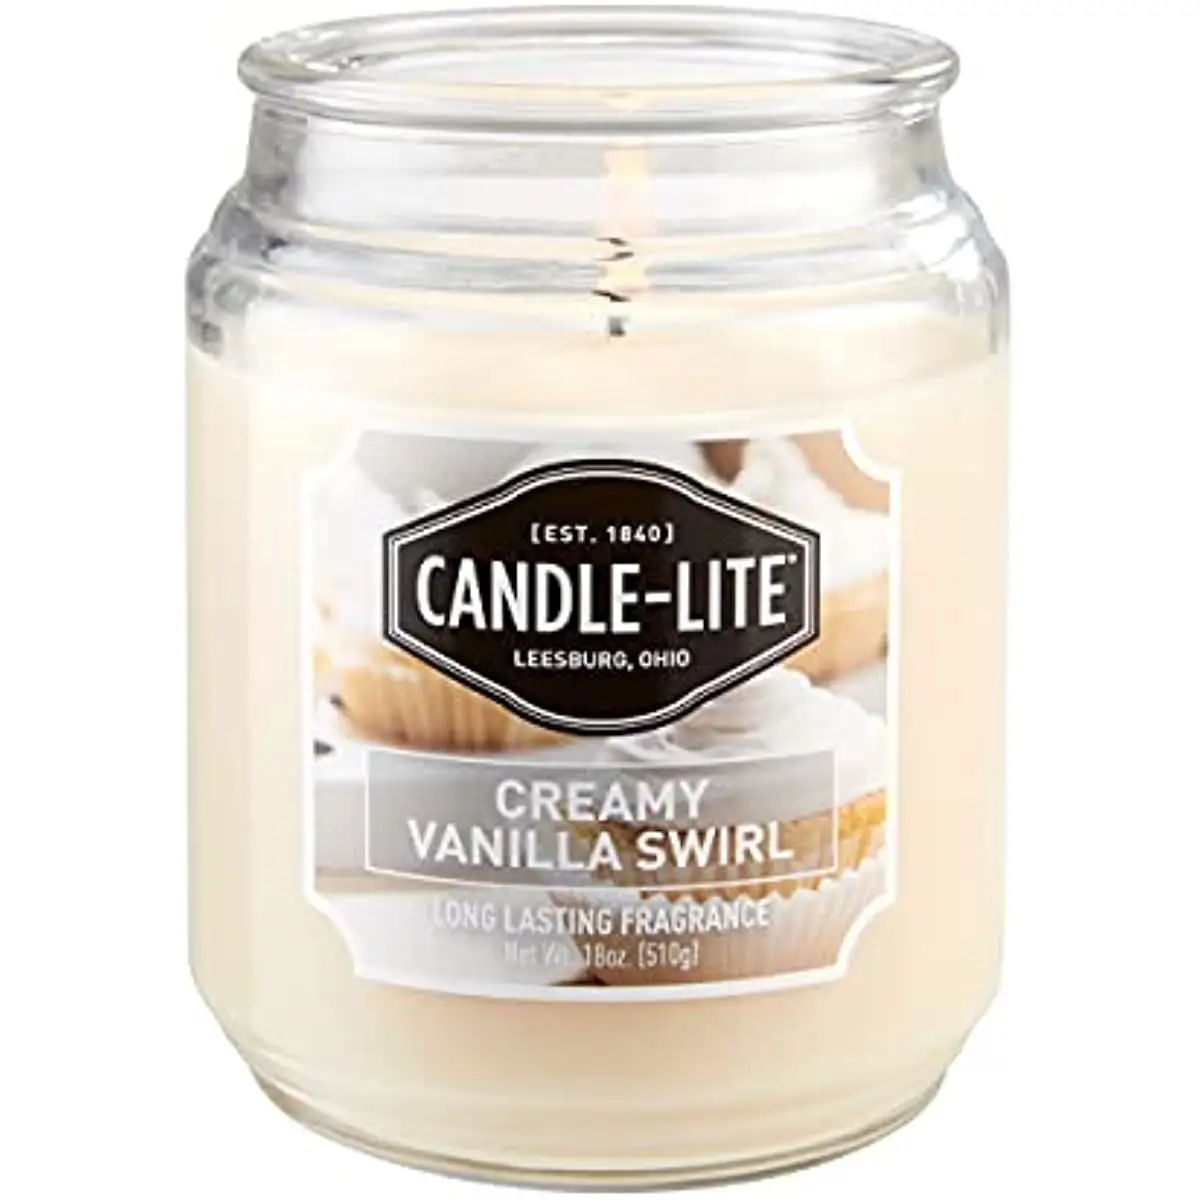 Newart Candle lite Duft kerzen Cremiger Vanille-Wirbel-Duft Single-Wick Aromatherapie-Kerze Weiße Farbe